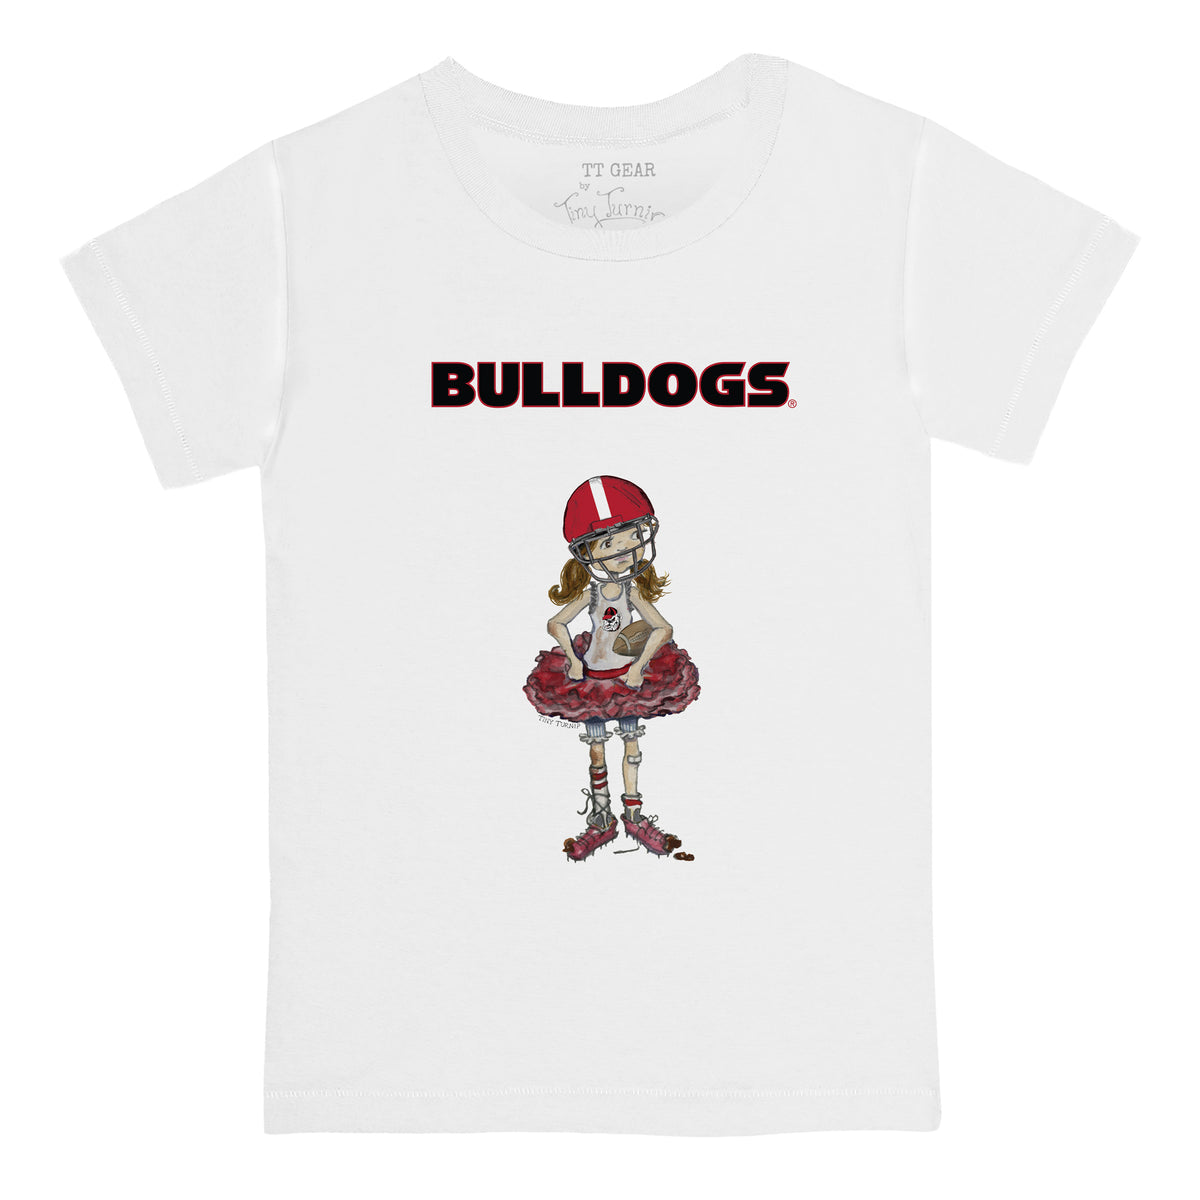 Georgia Bulldogs Babes Tee Shirt